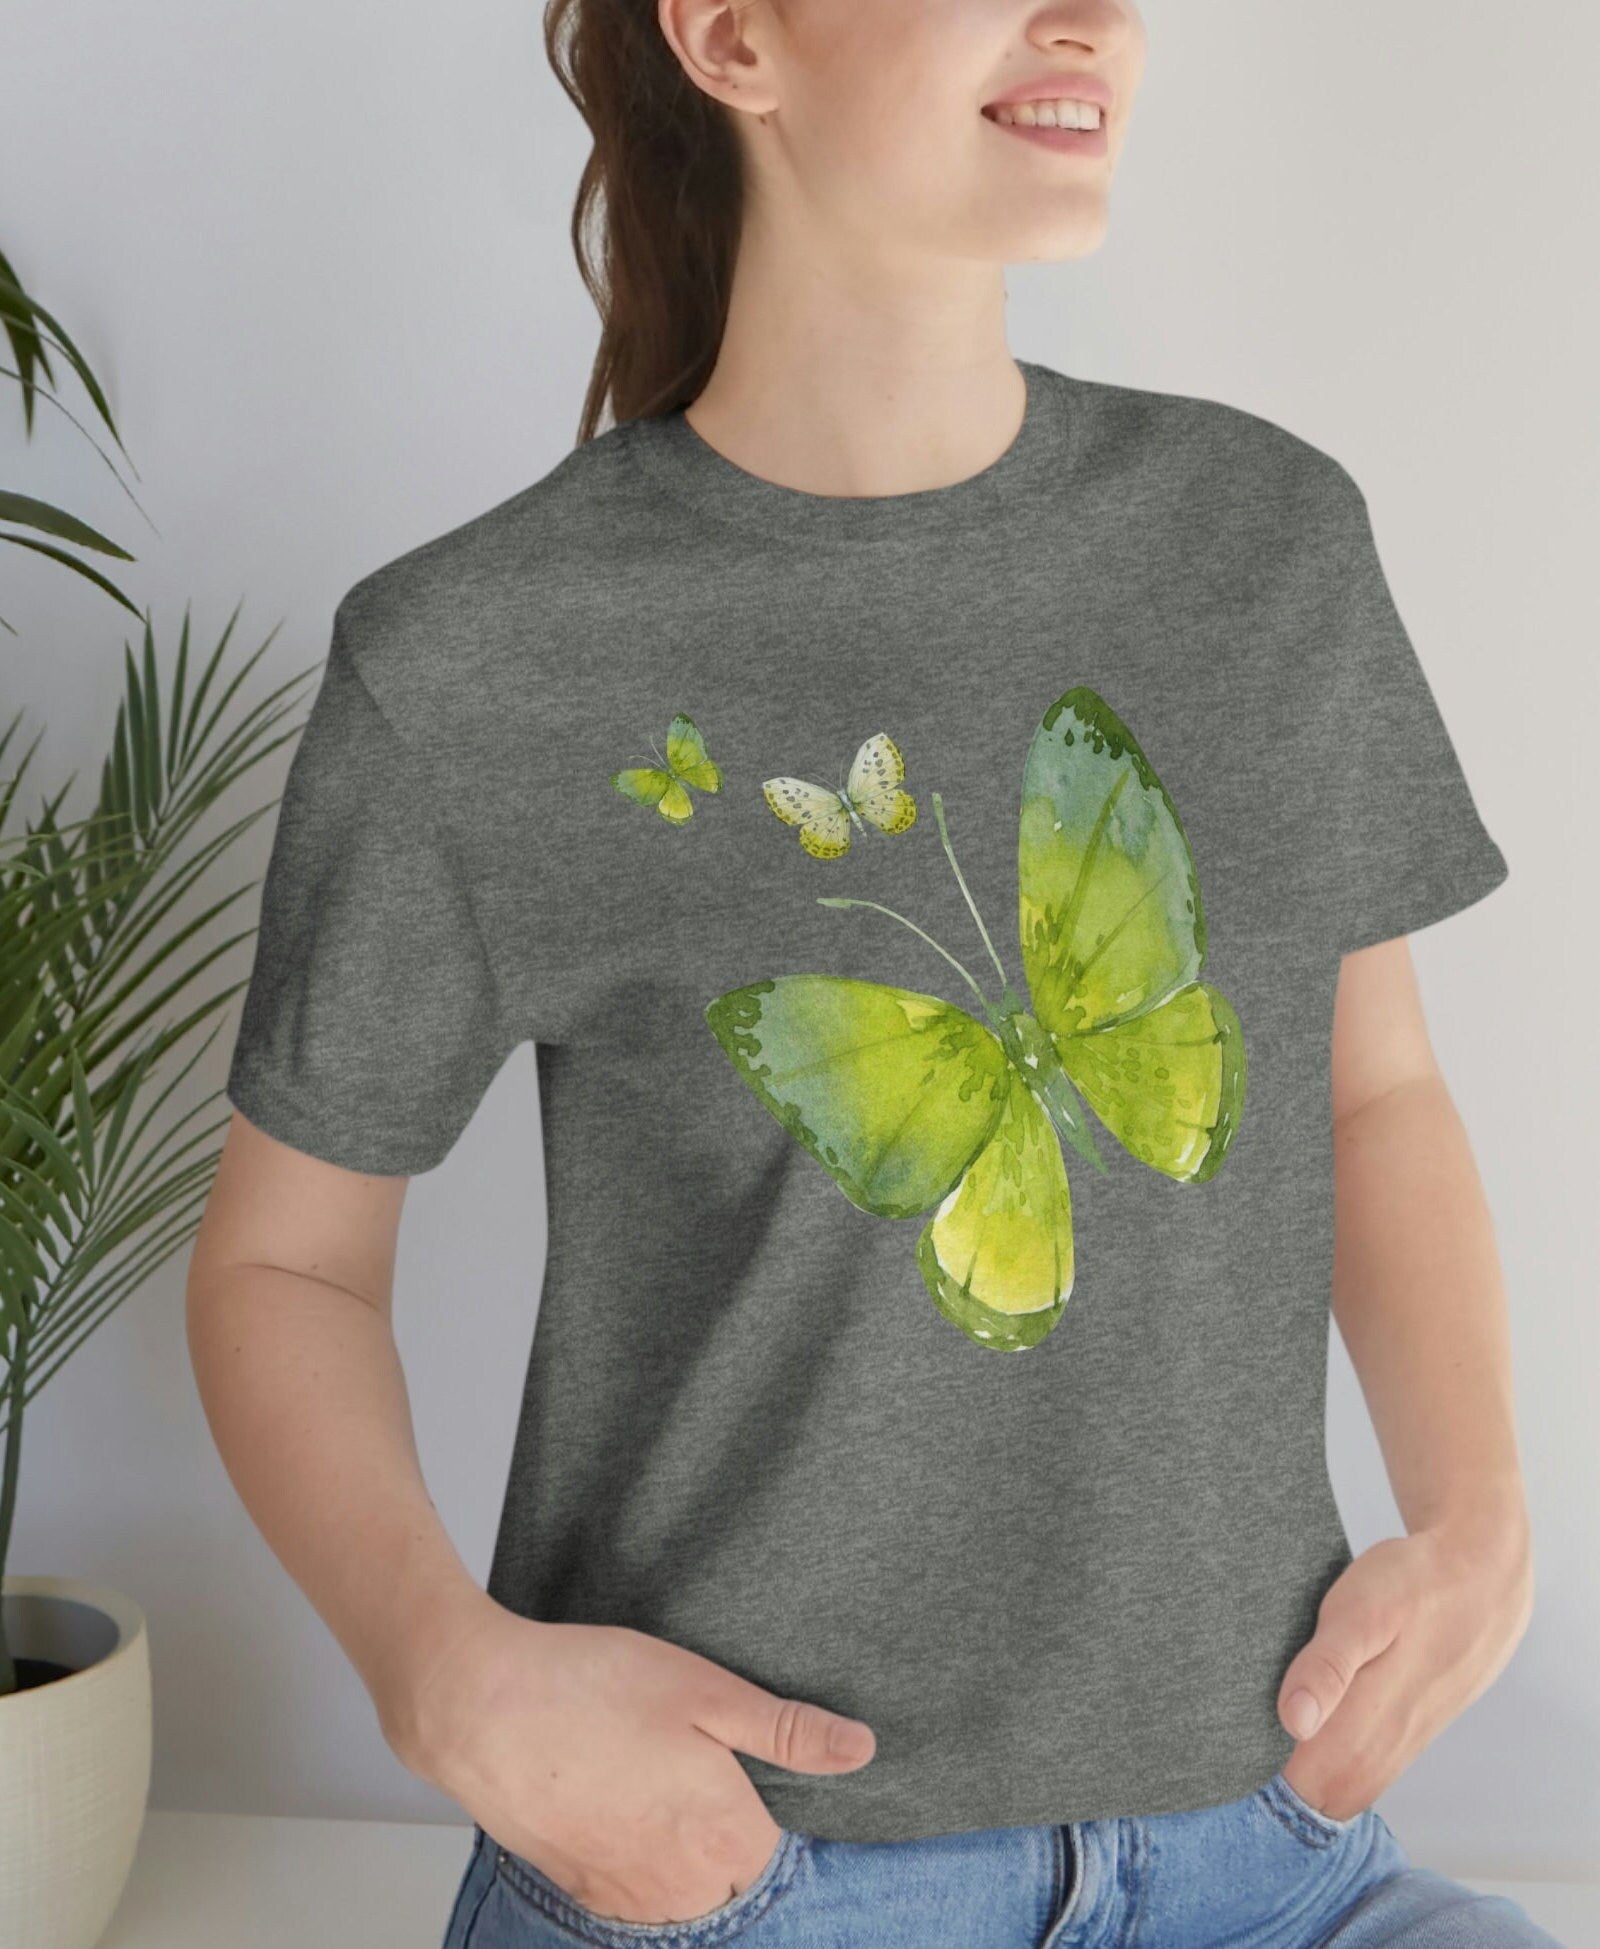 Butterfly T-shirt, Butterfly Tee, Nature Lover Shirt, Butterflies Tee Gift, Insect Shirts, Aesthetic Shirt, Butterfly Cute Shirt